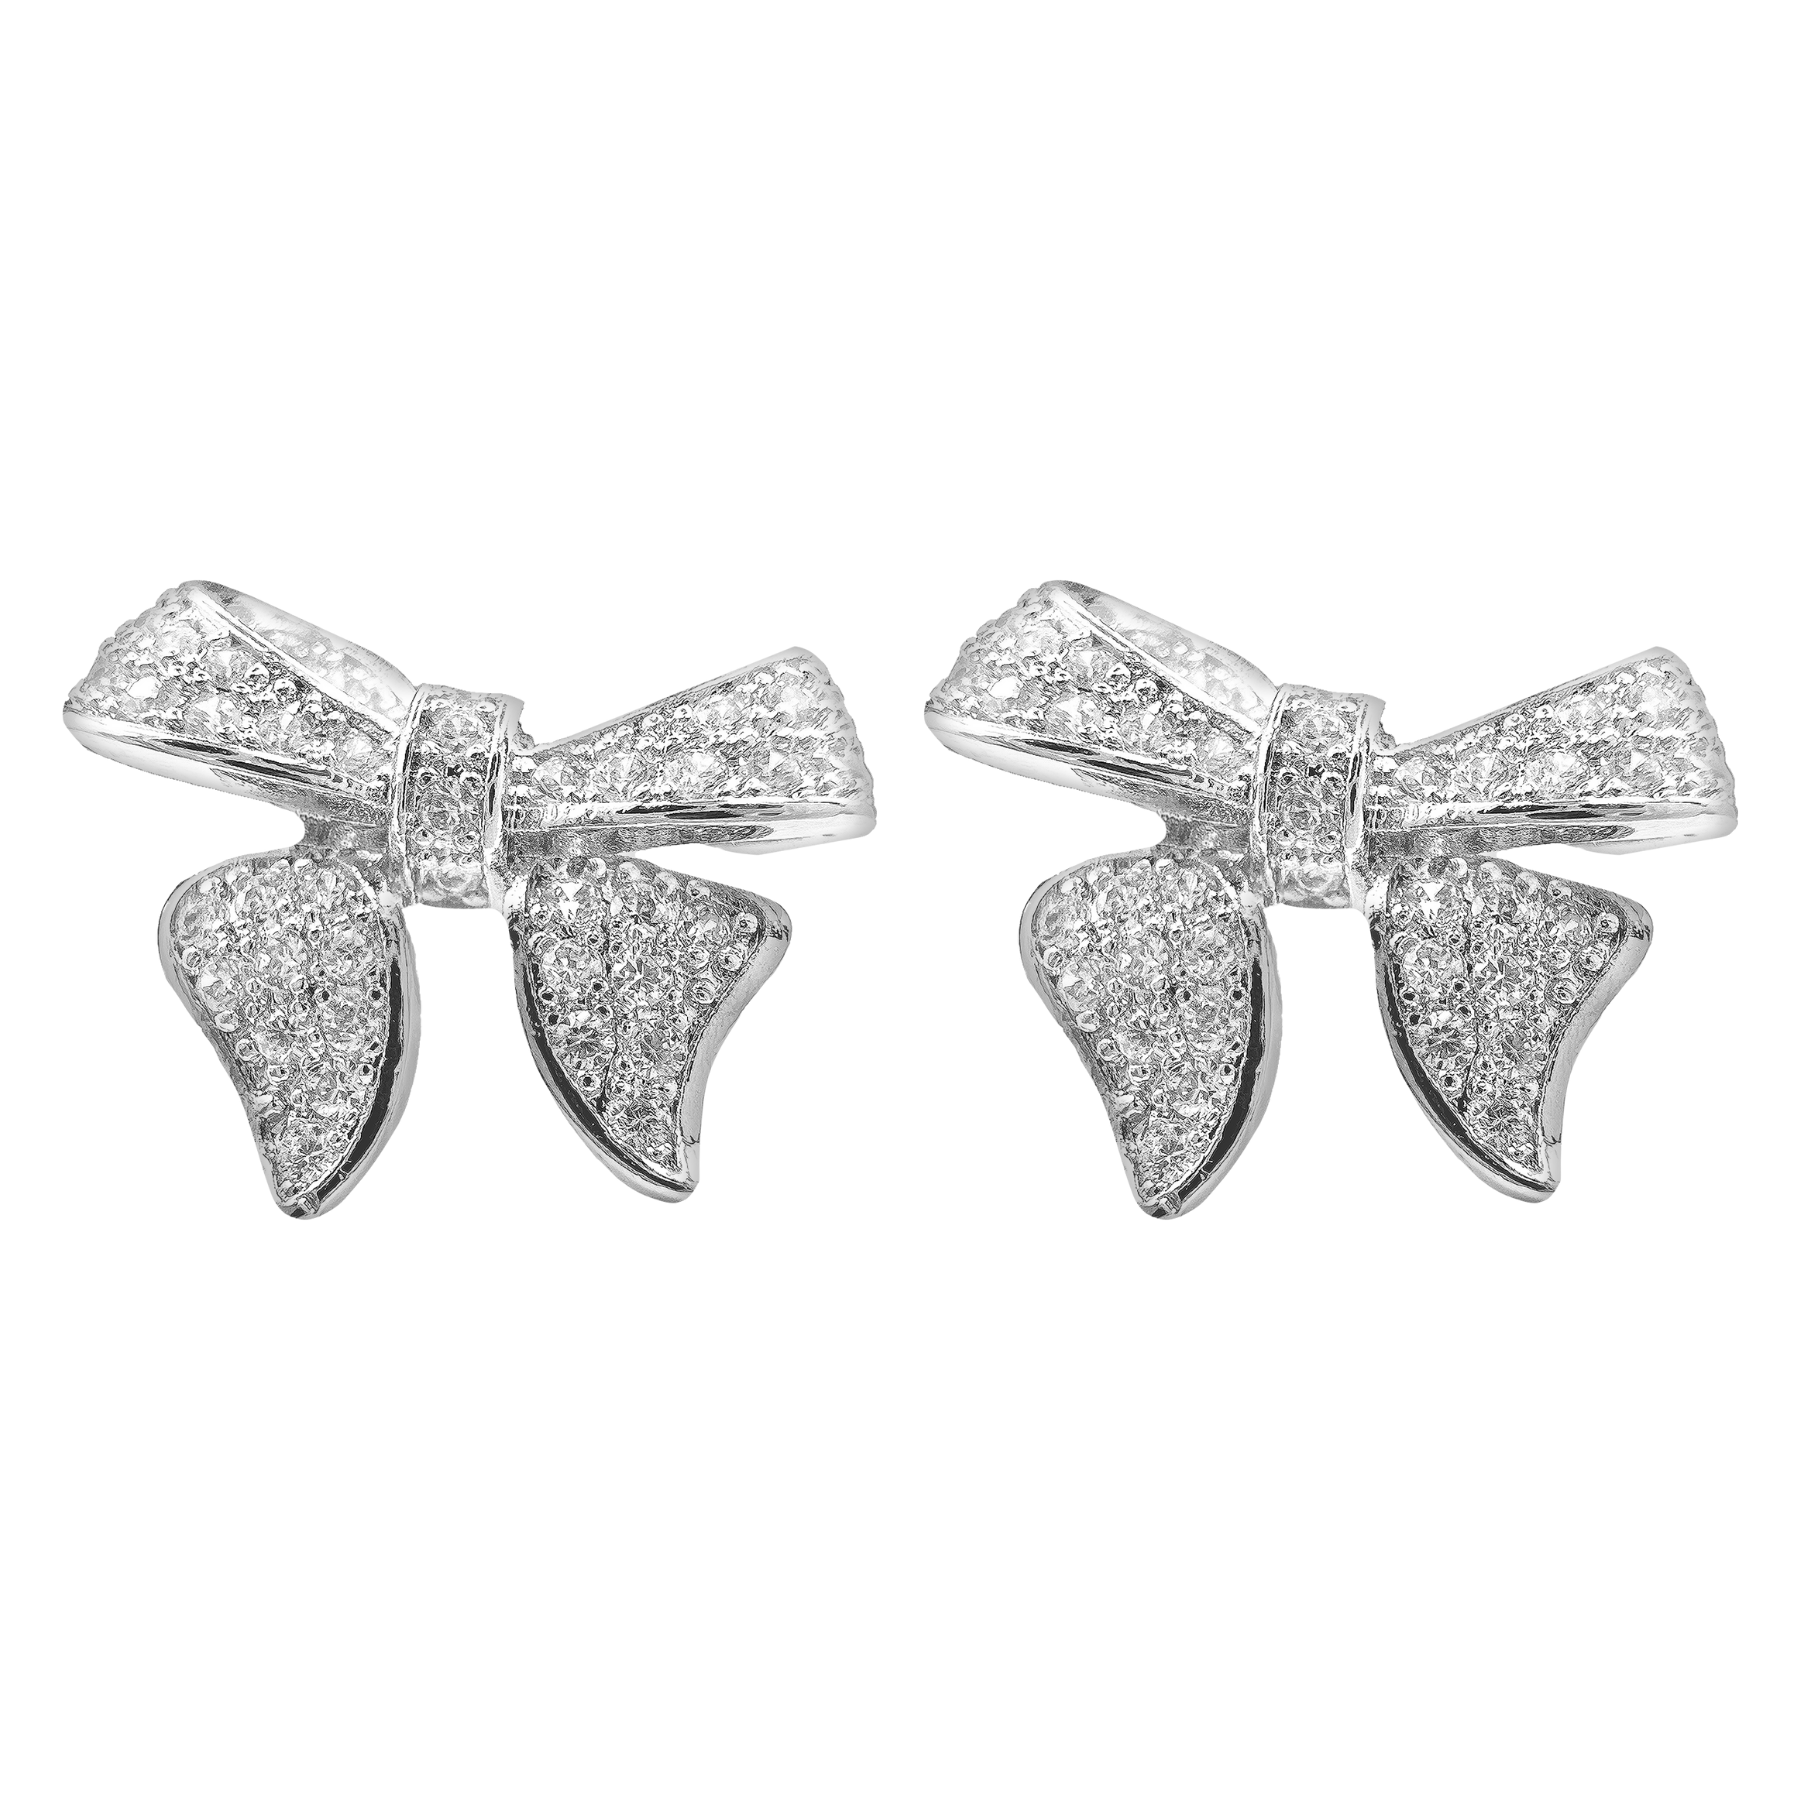 Pretty Girl Cosmetics | Rhinestone Bow Earrings | Dancer Jewelry